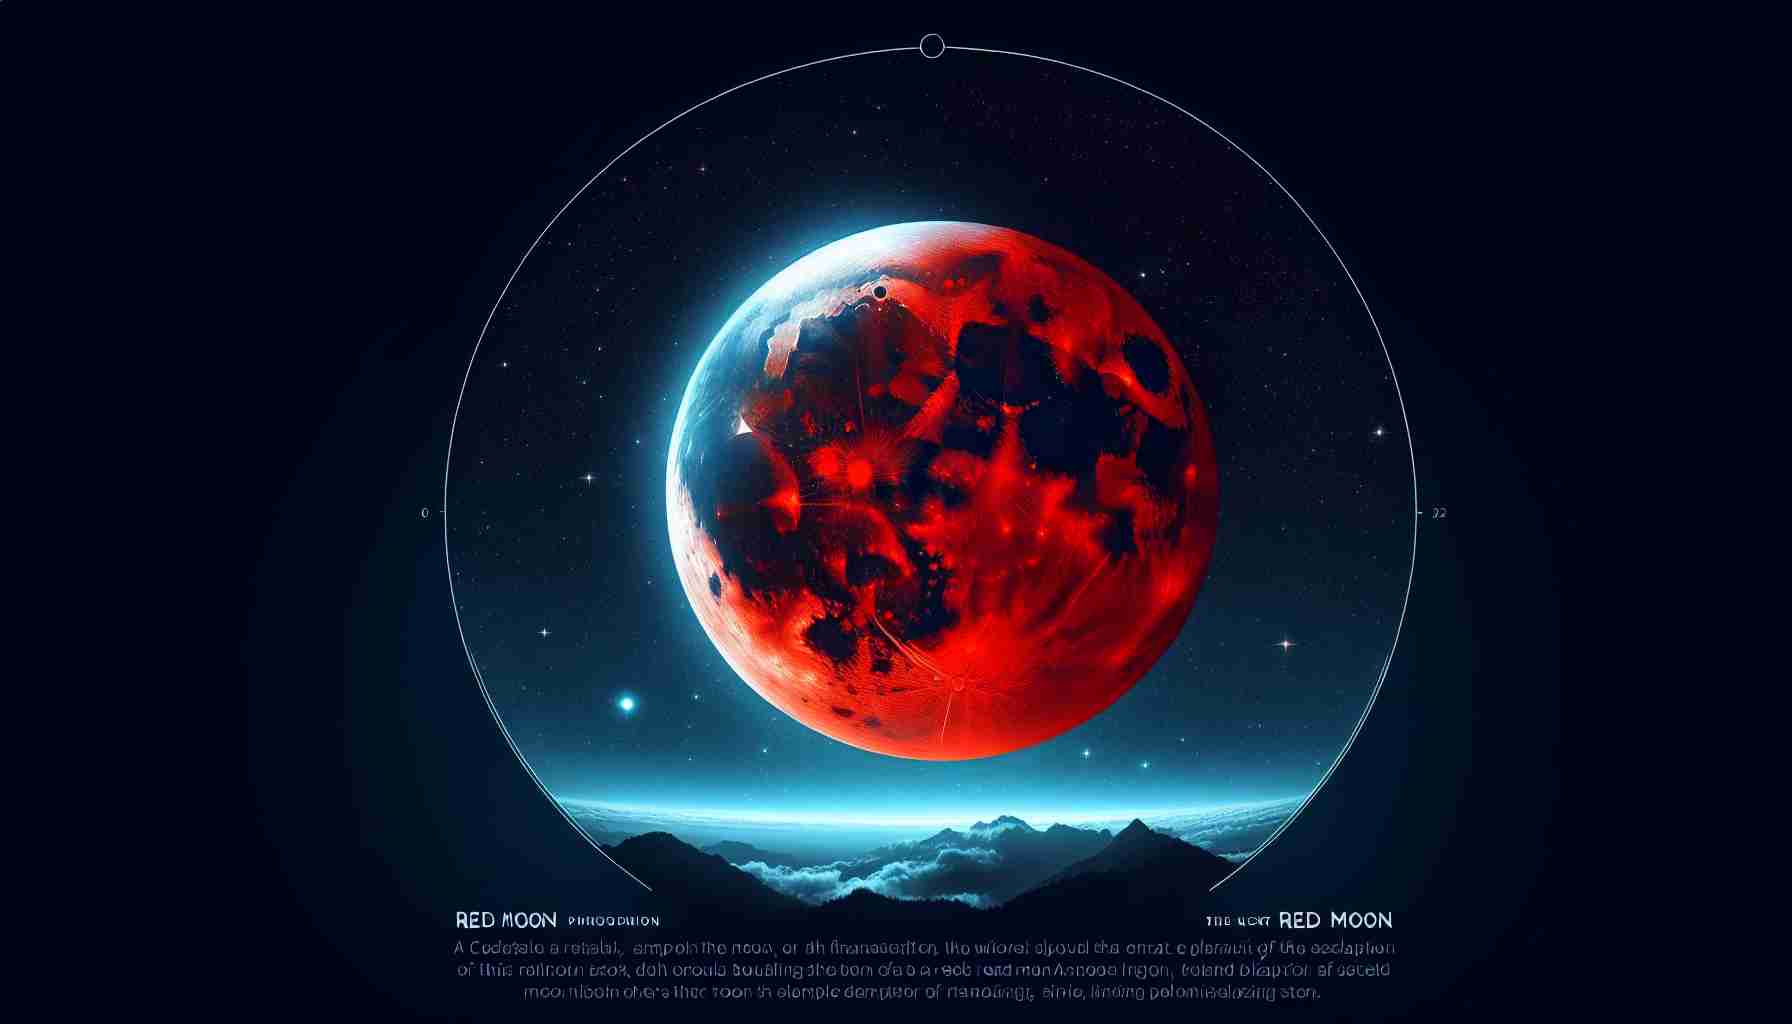 The Next Red Moon A Celestial Phenomenon Explained